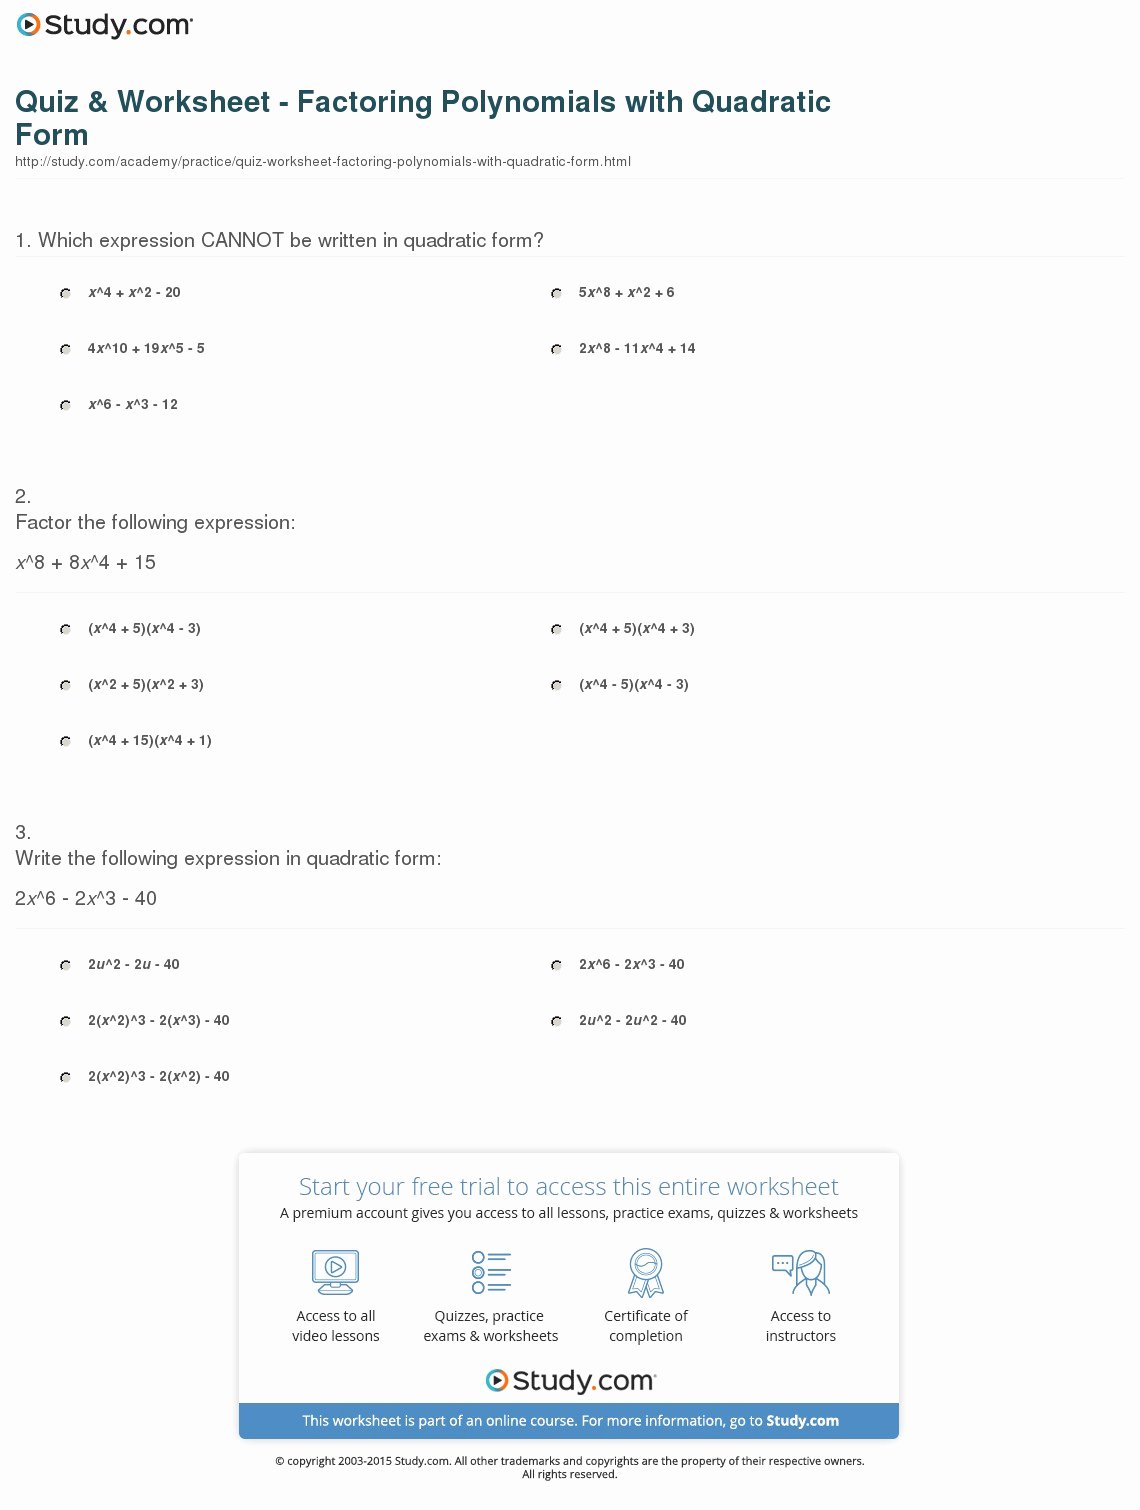 Factoring Quadratics Worksheet Answers Inspirational Quiz &amp; Worksheet Factoring Polynomials with Quadratic